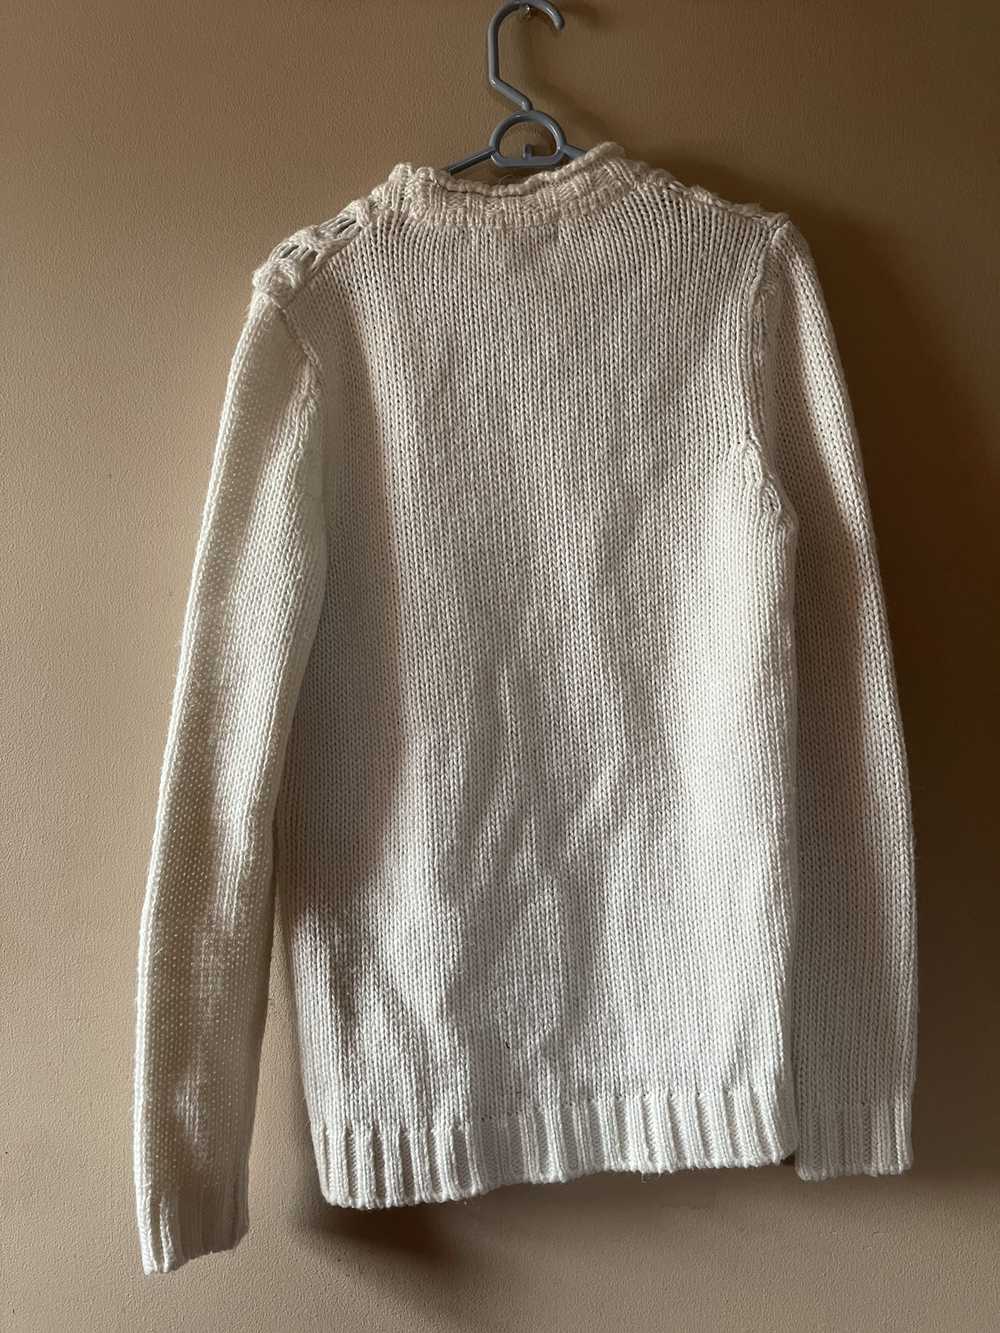 Zara White Knit Sweater - image 5